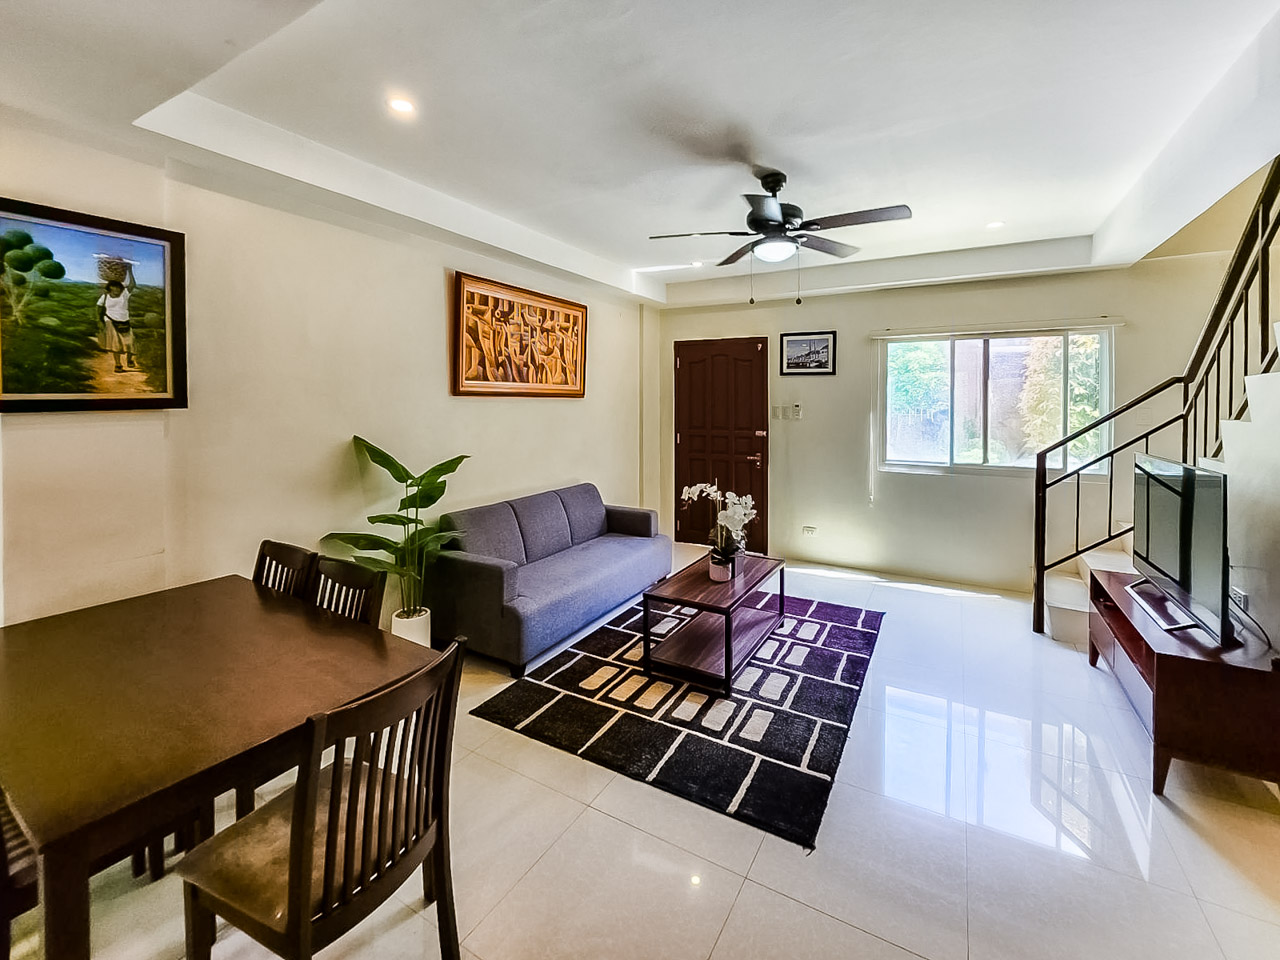 SRBBT1 3 Bedroom Duplex House for Sale in Talisay Cebu - 2